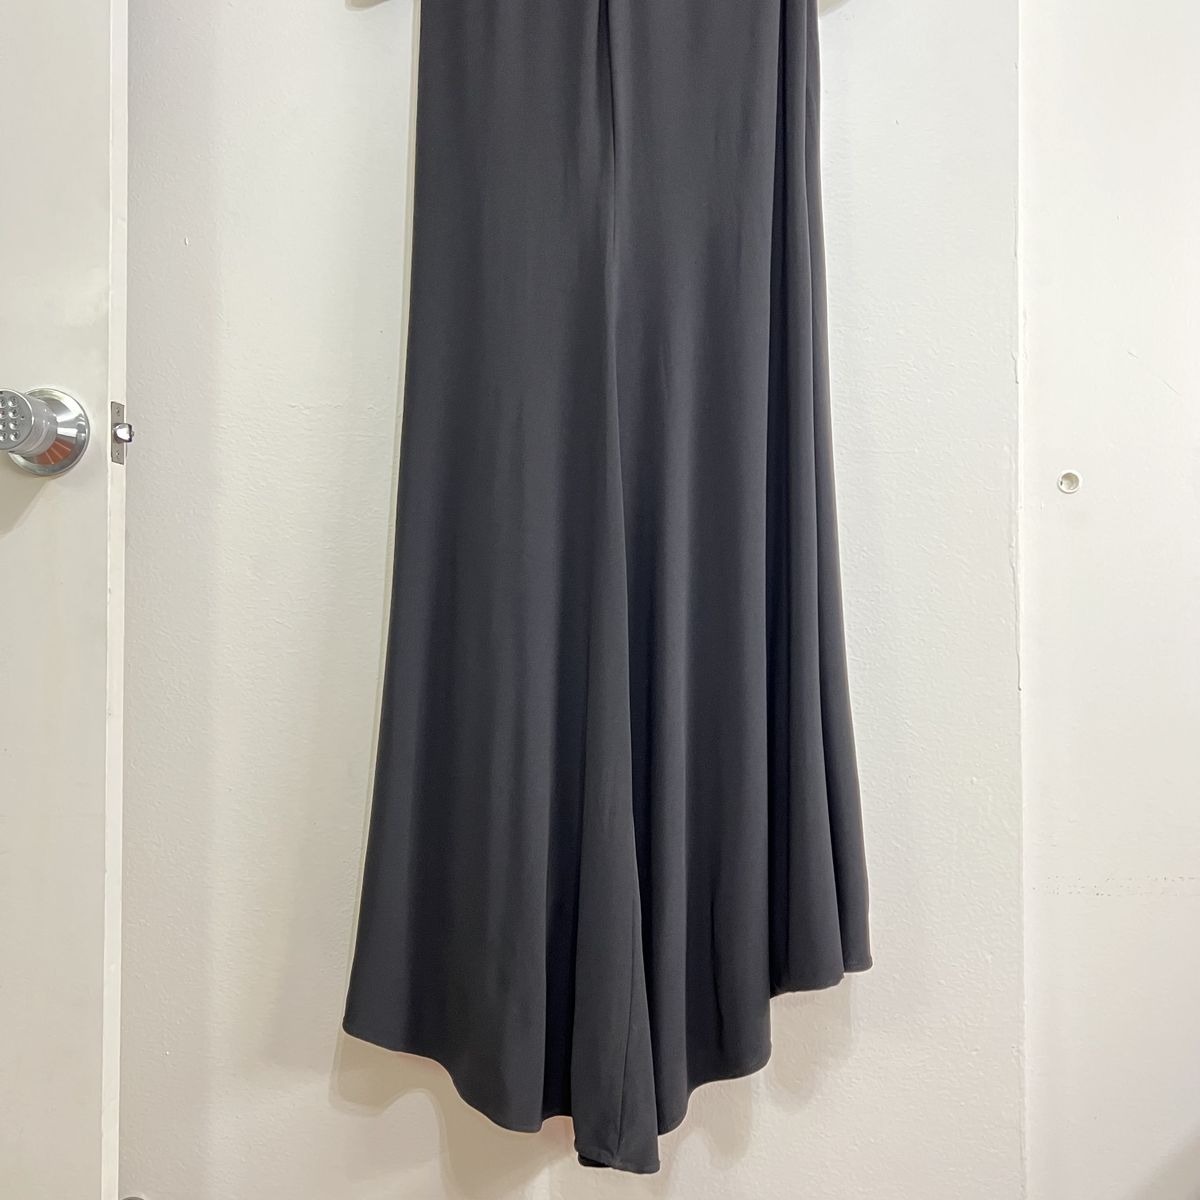 Style 29044 La Femme Plus Size 20 Plunge Black Side Slit Dress on Queenly